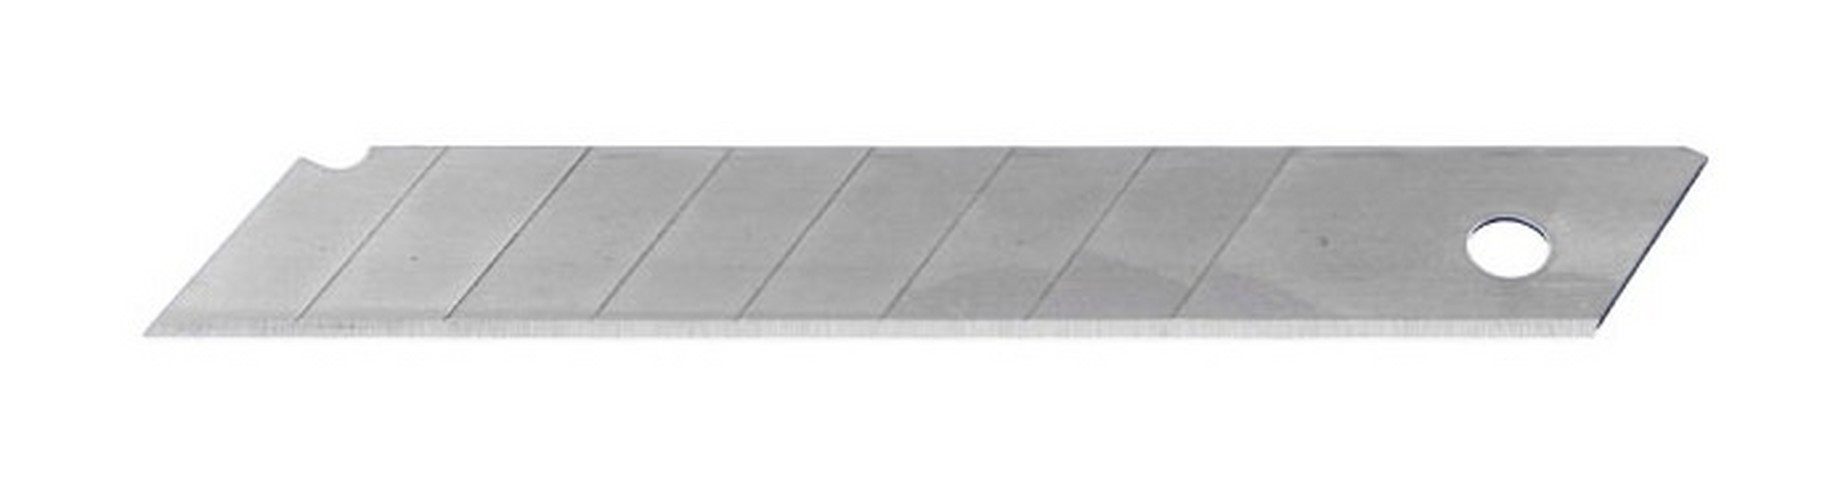 Cimco Cuttermesser, Ersatzmesser Universalmesser gerade 10st